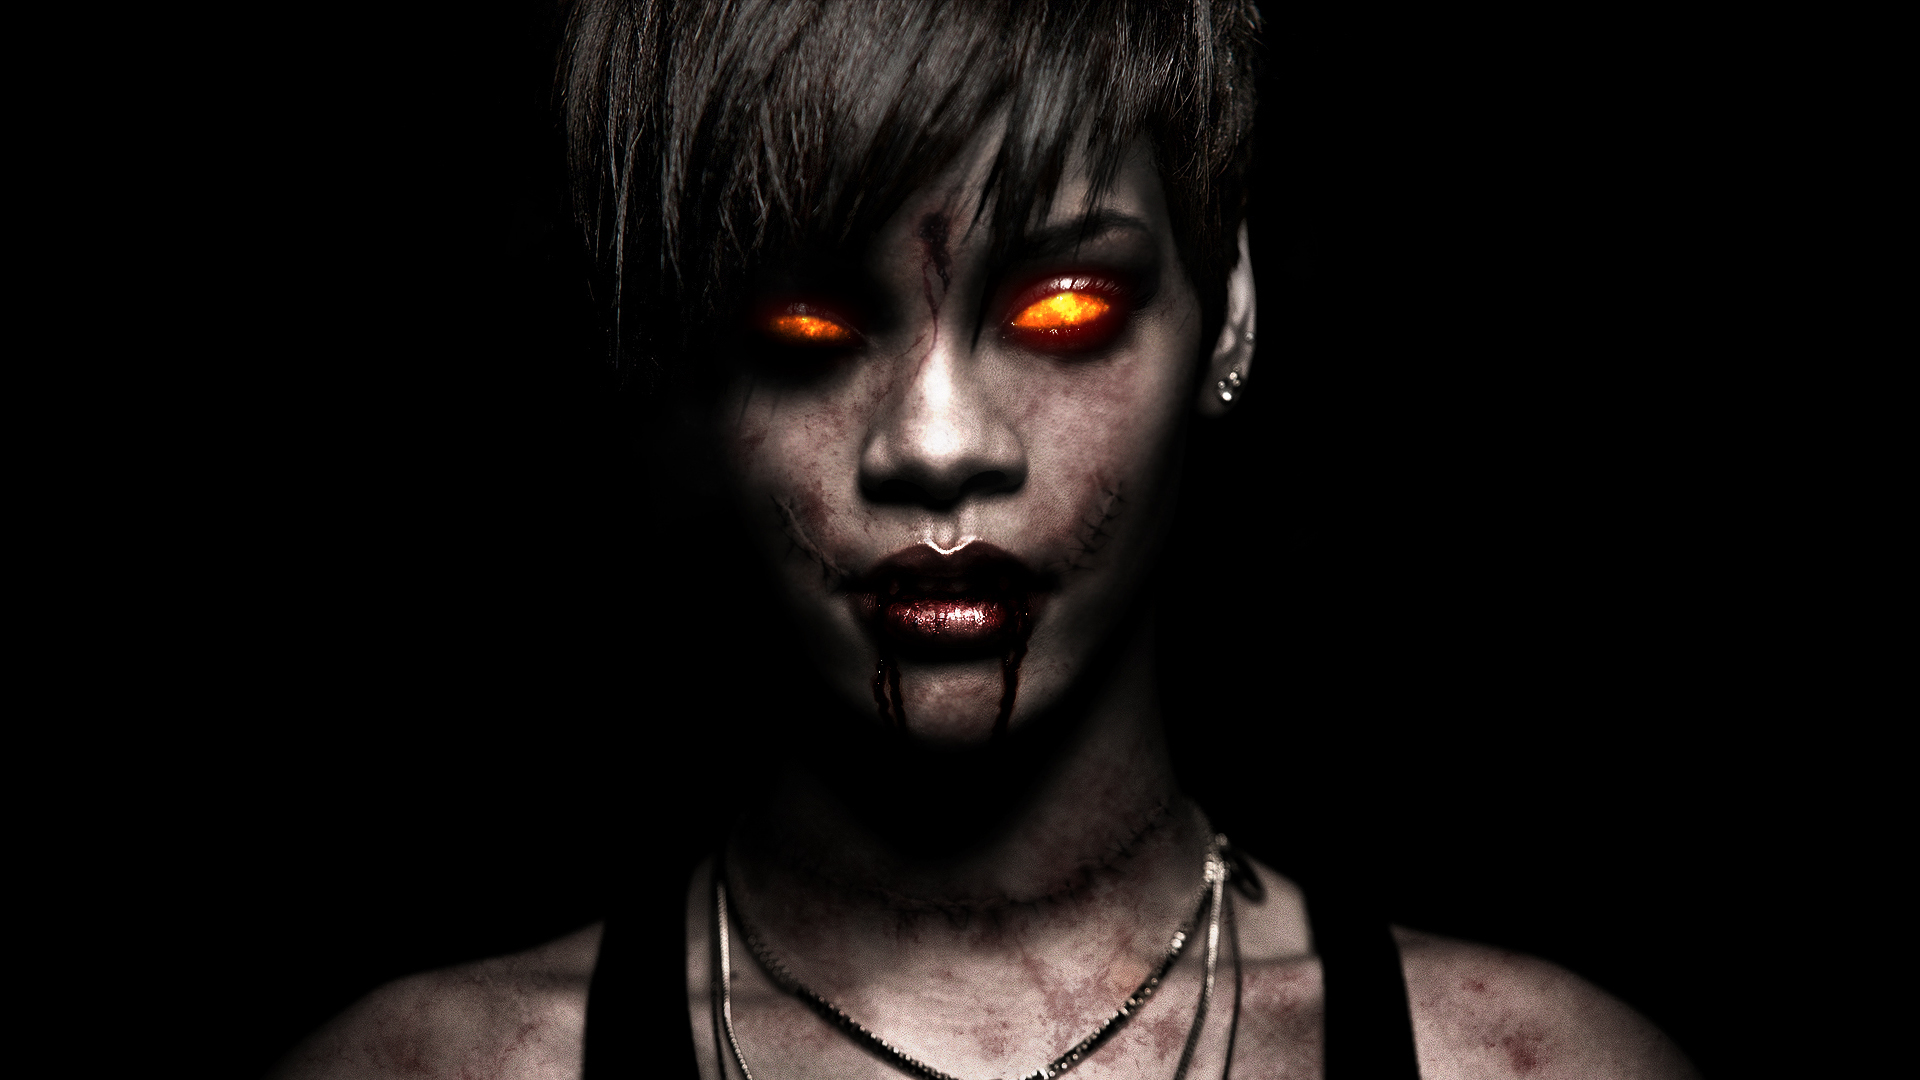 Rihanna Brute Zombie Demon Creepy Face Eyes Singer Musician Women